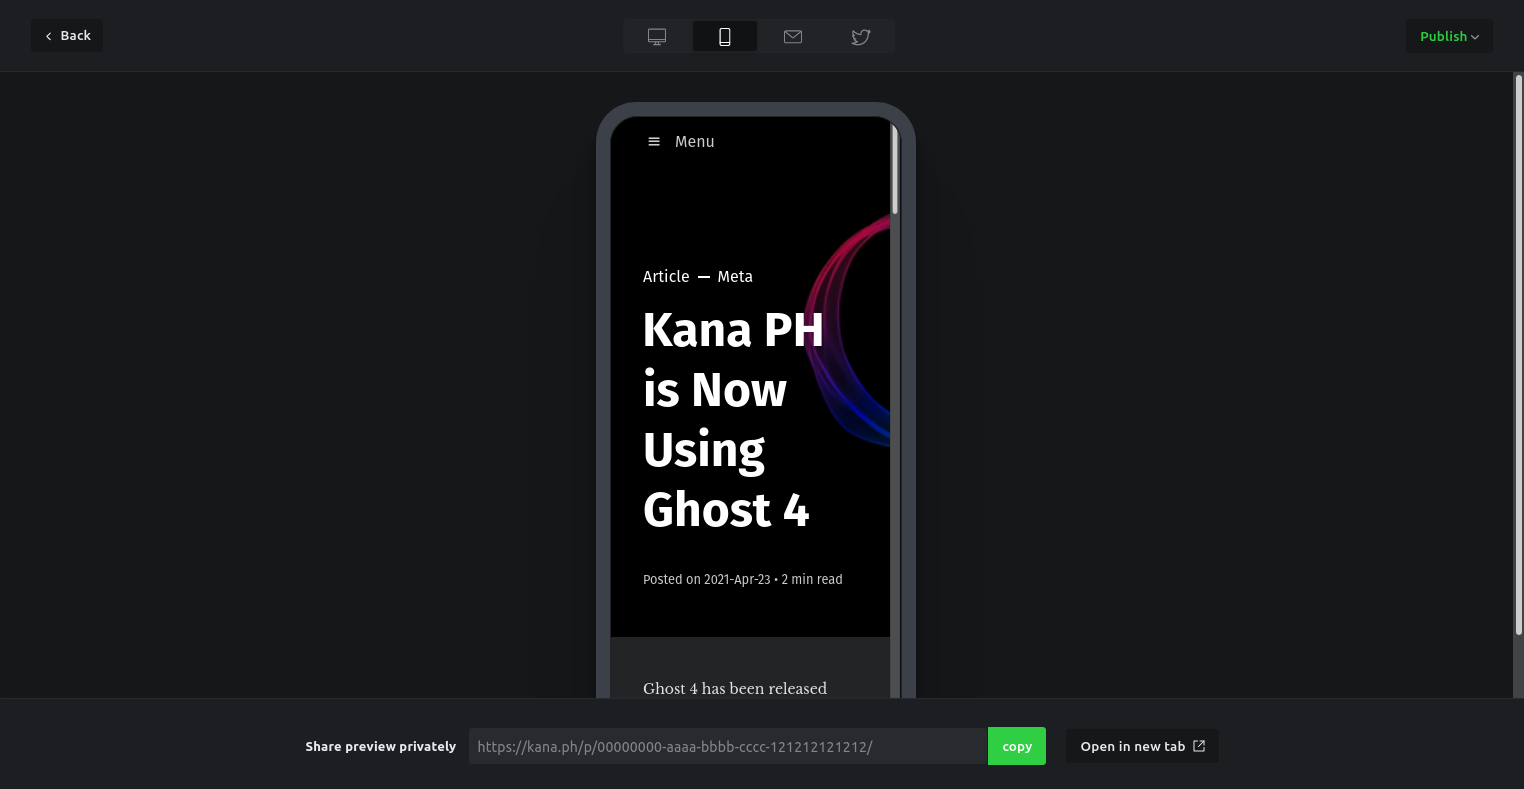 Kana PH is Now Using Ghost 4